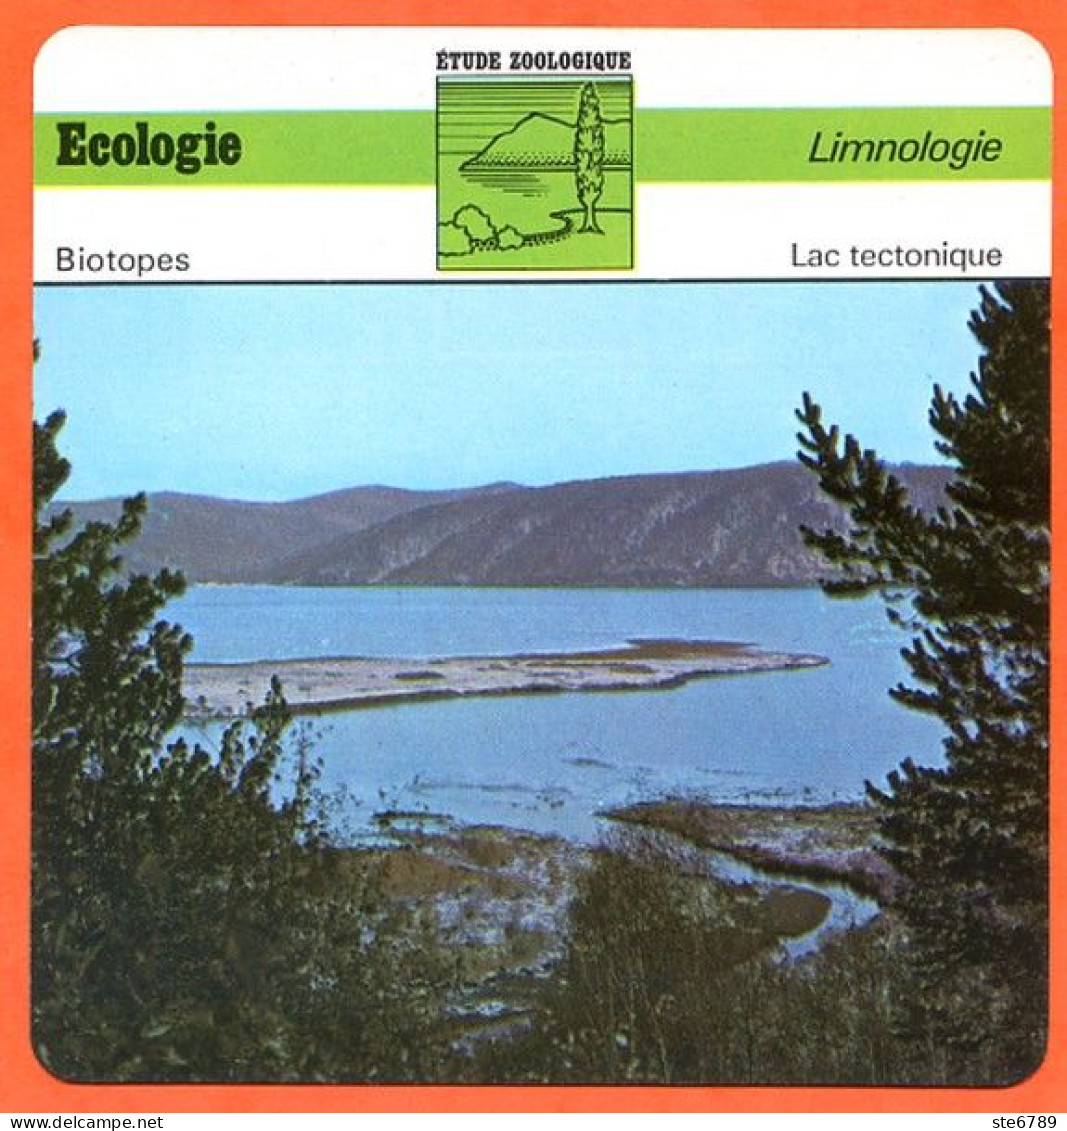 Fiche Ecologie Lac Tectonique Illustration Lac Baïkal Limnologie  Etude Zoologique Biotopes - Aardrijkskunde